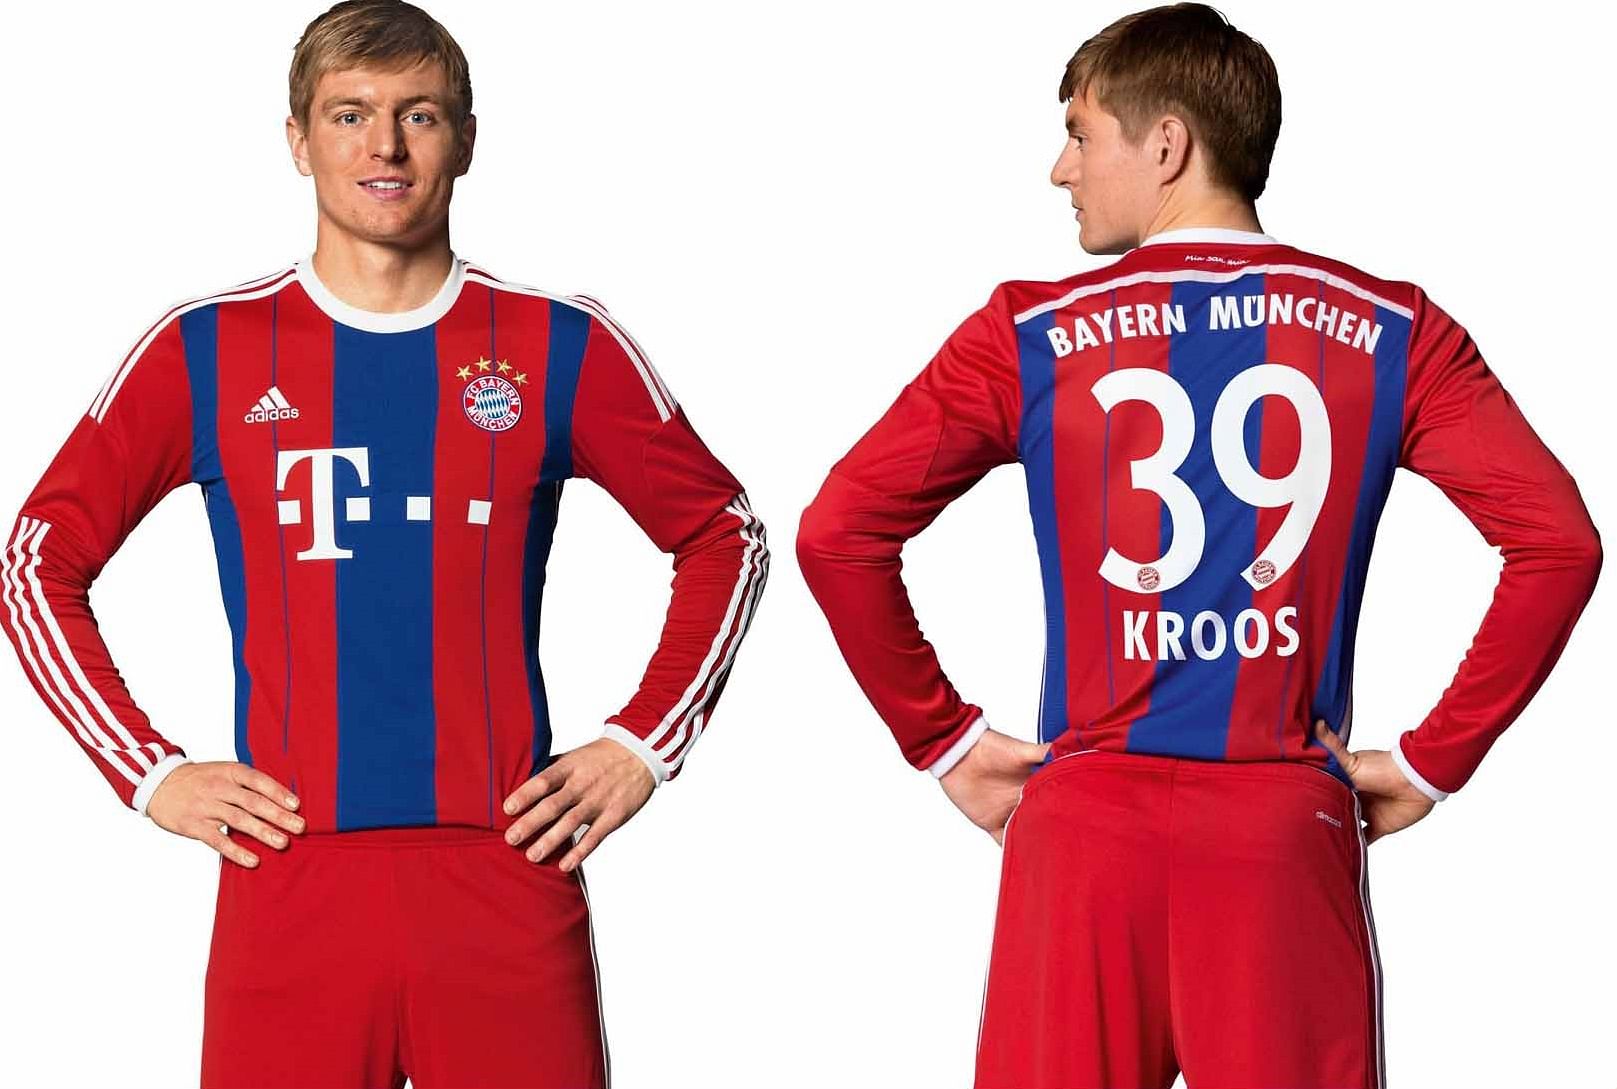 Bayern Munich's new kits for 201415 season released